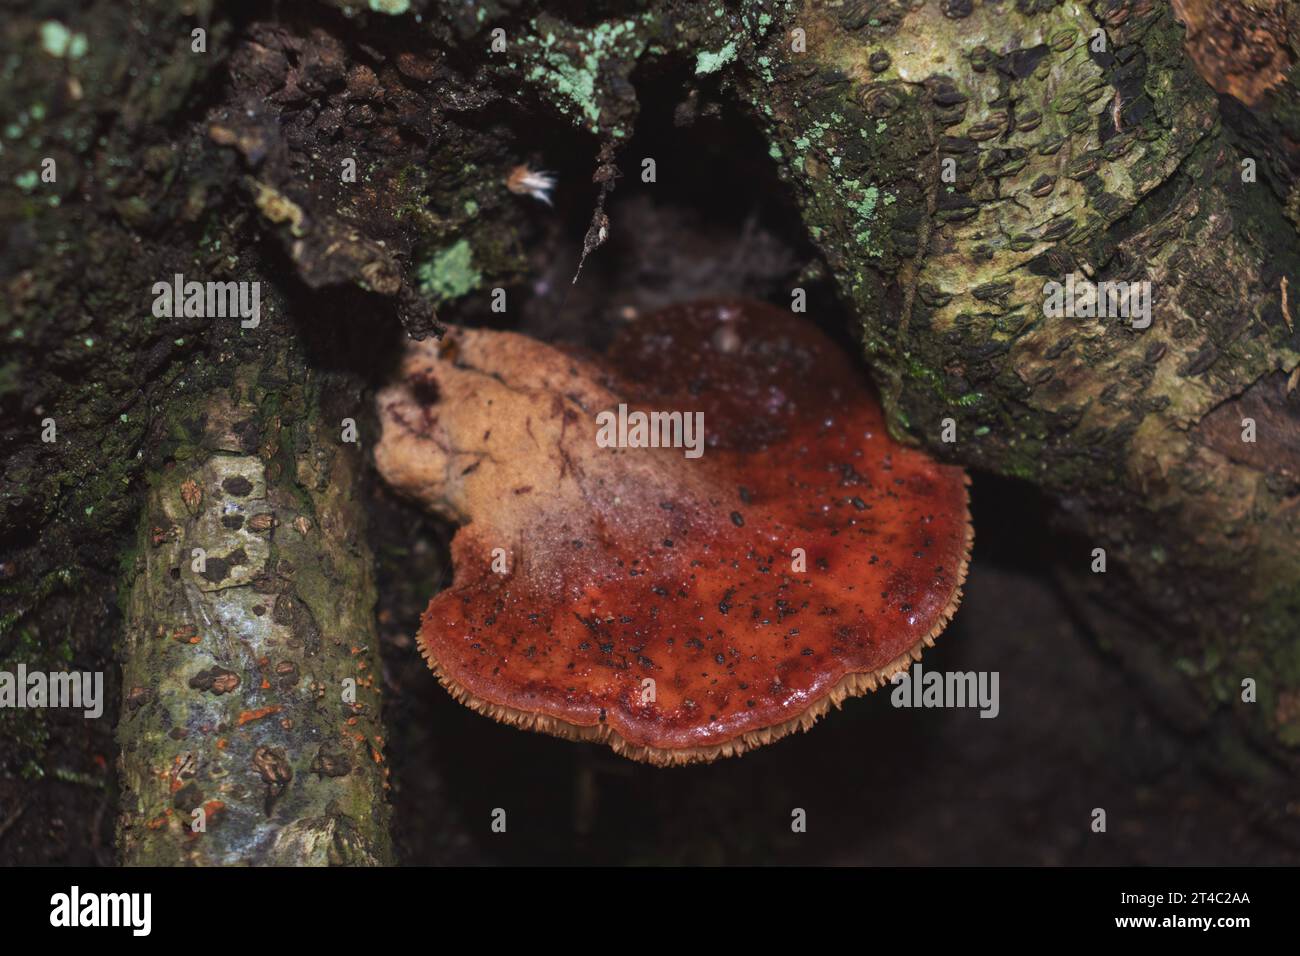 Top view of Fistulina hepatica mushroom (a.k.a. beefsteak fungus). Edible mushroom, rich in vitamin c. Stock Photo